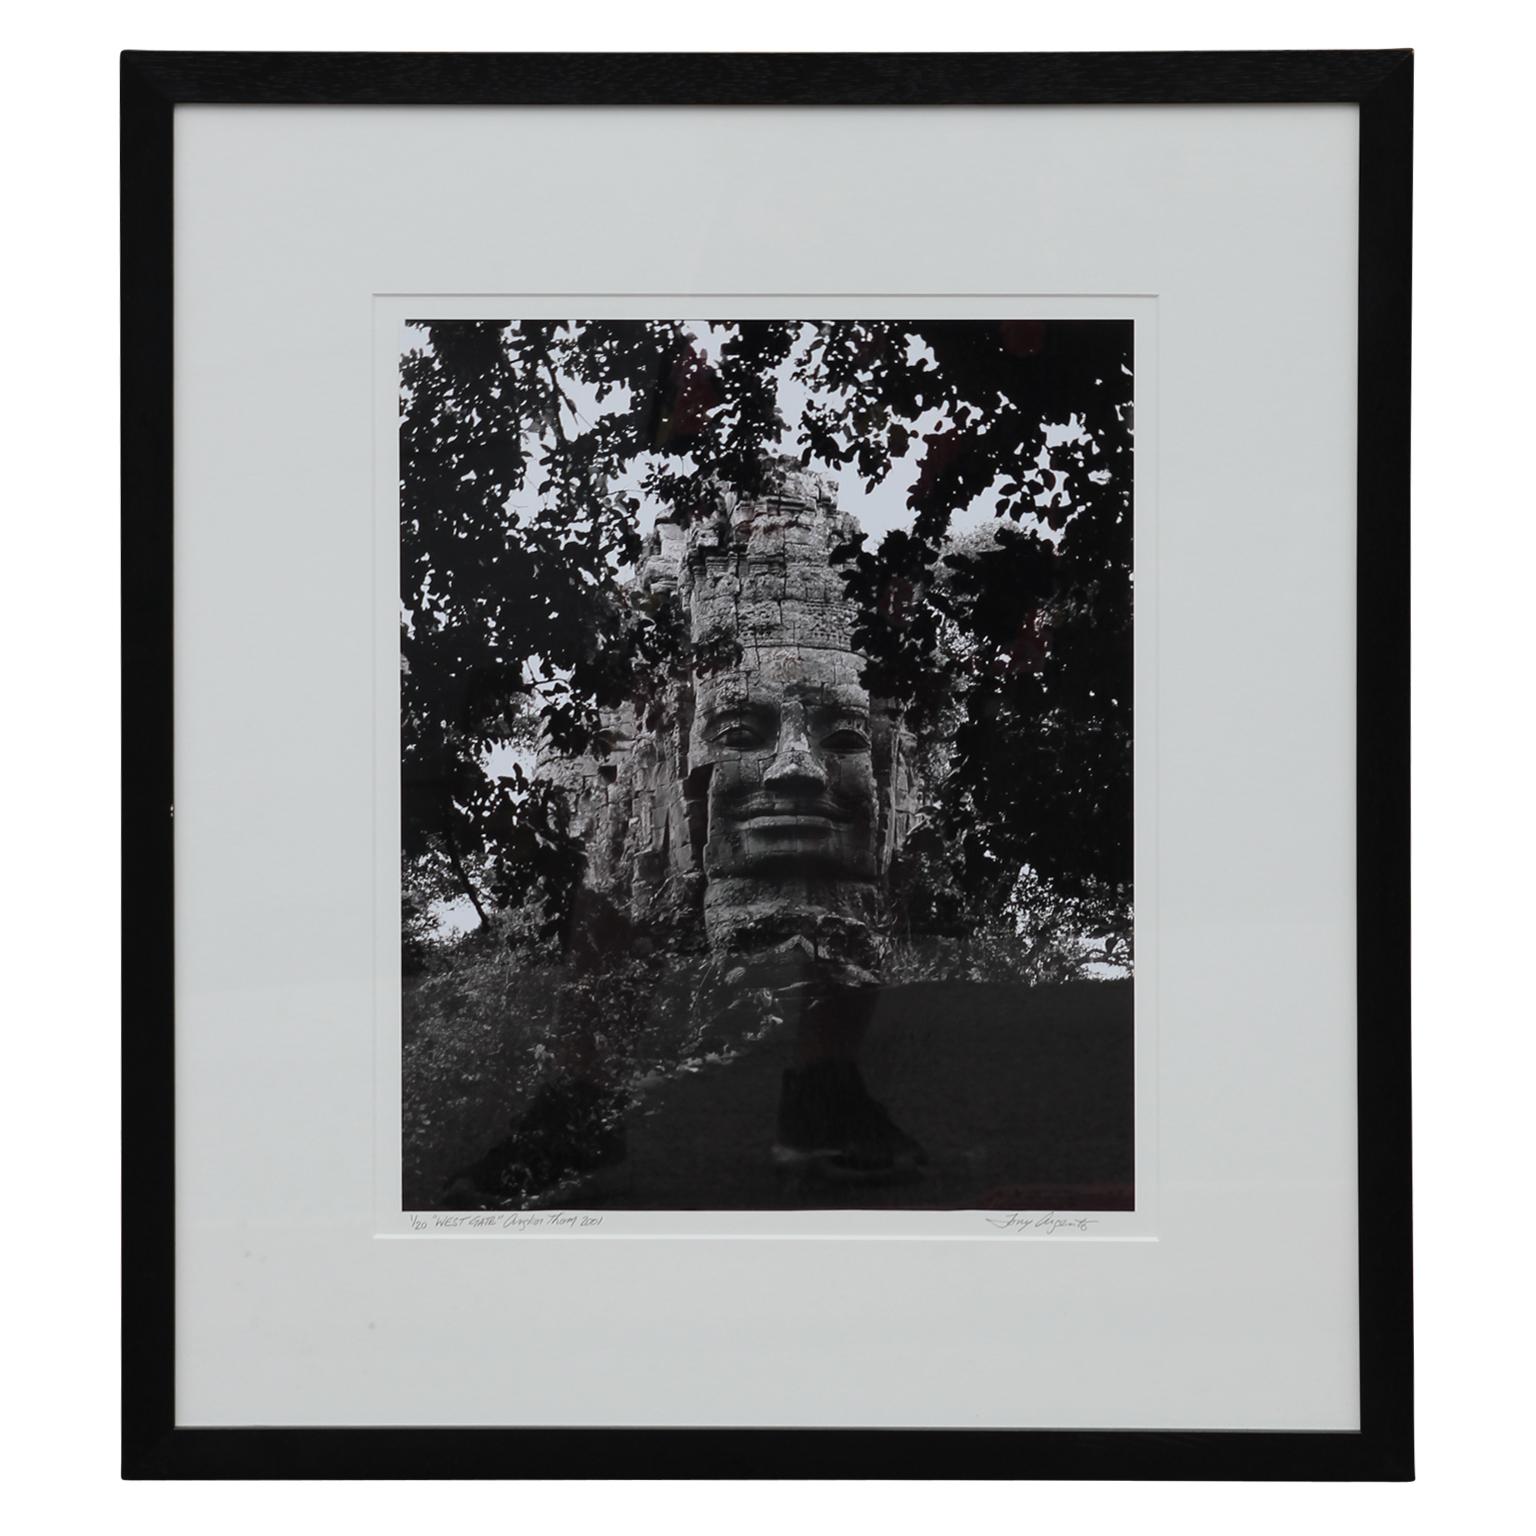 Tony Argento Figurative Photograph - "West Gate" Angkor Thom, Cambodia Black and White Photograph